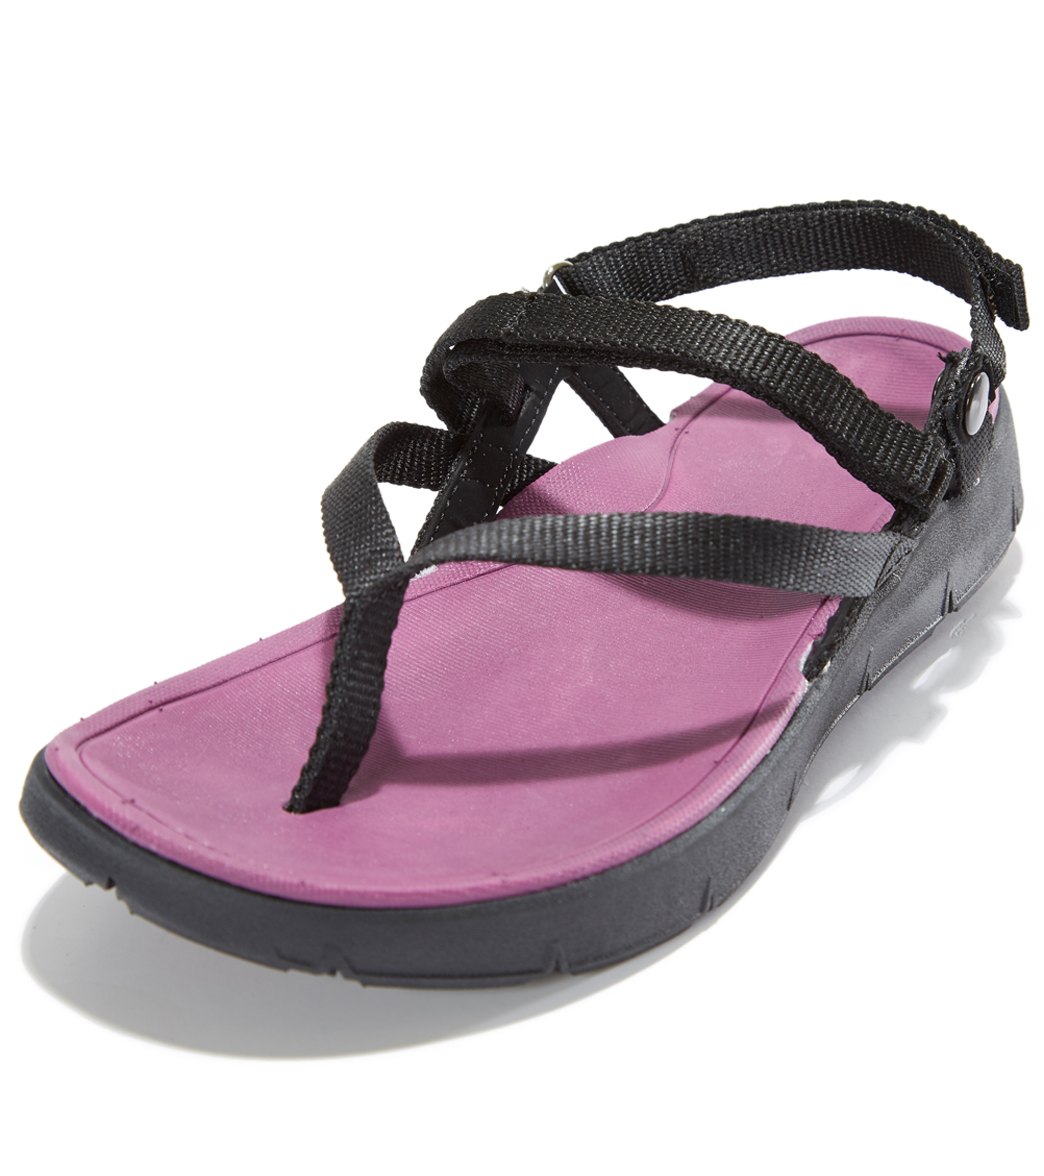 Northside Women's Sumatra Convertible Slides Sandals - Black/Berry 10 - Swimoutlet.com